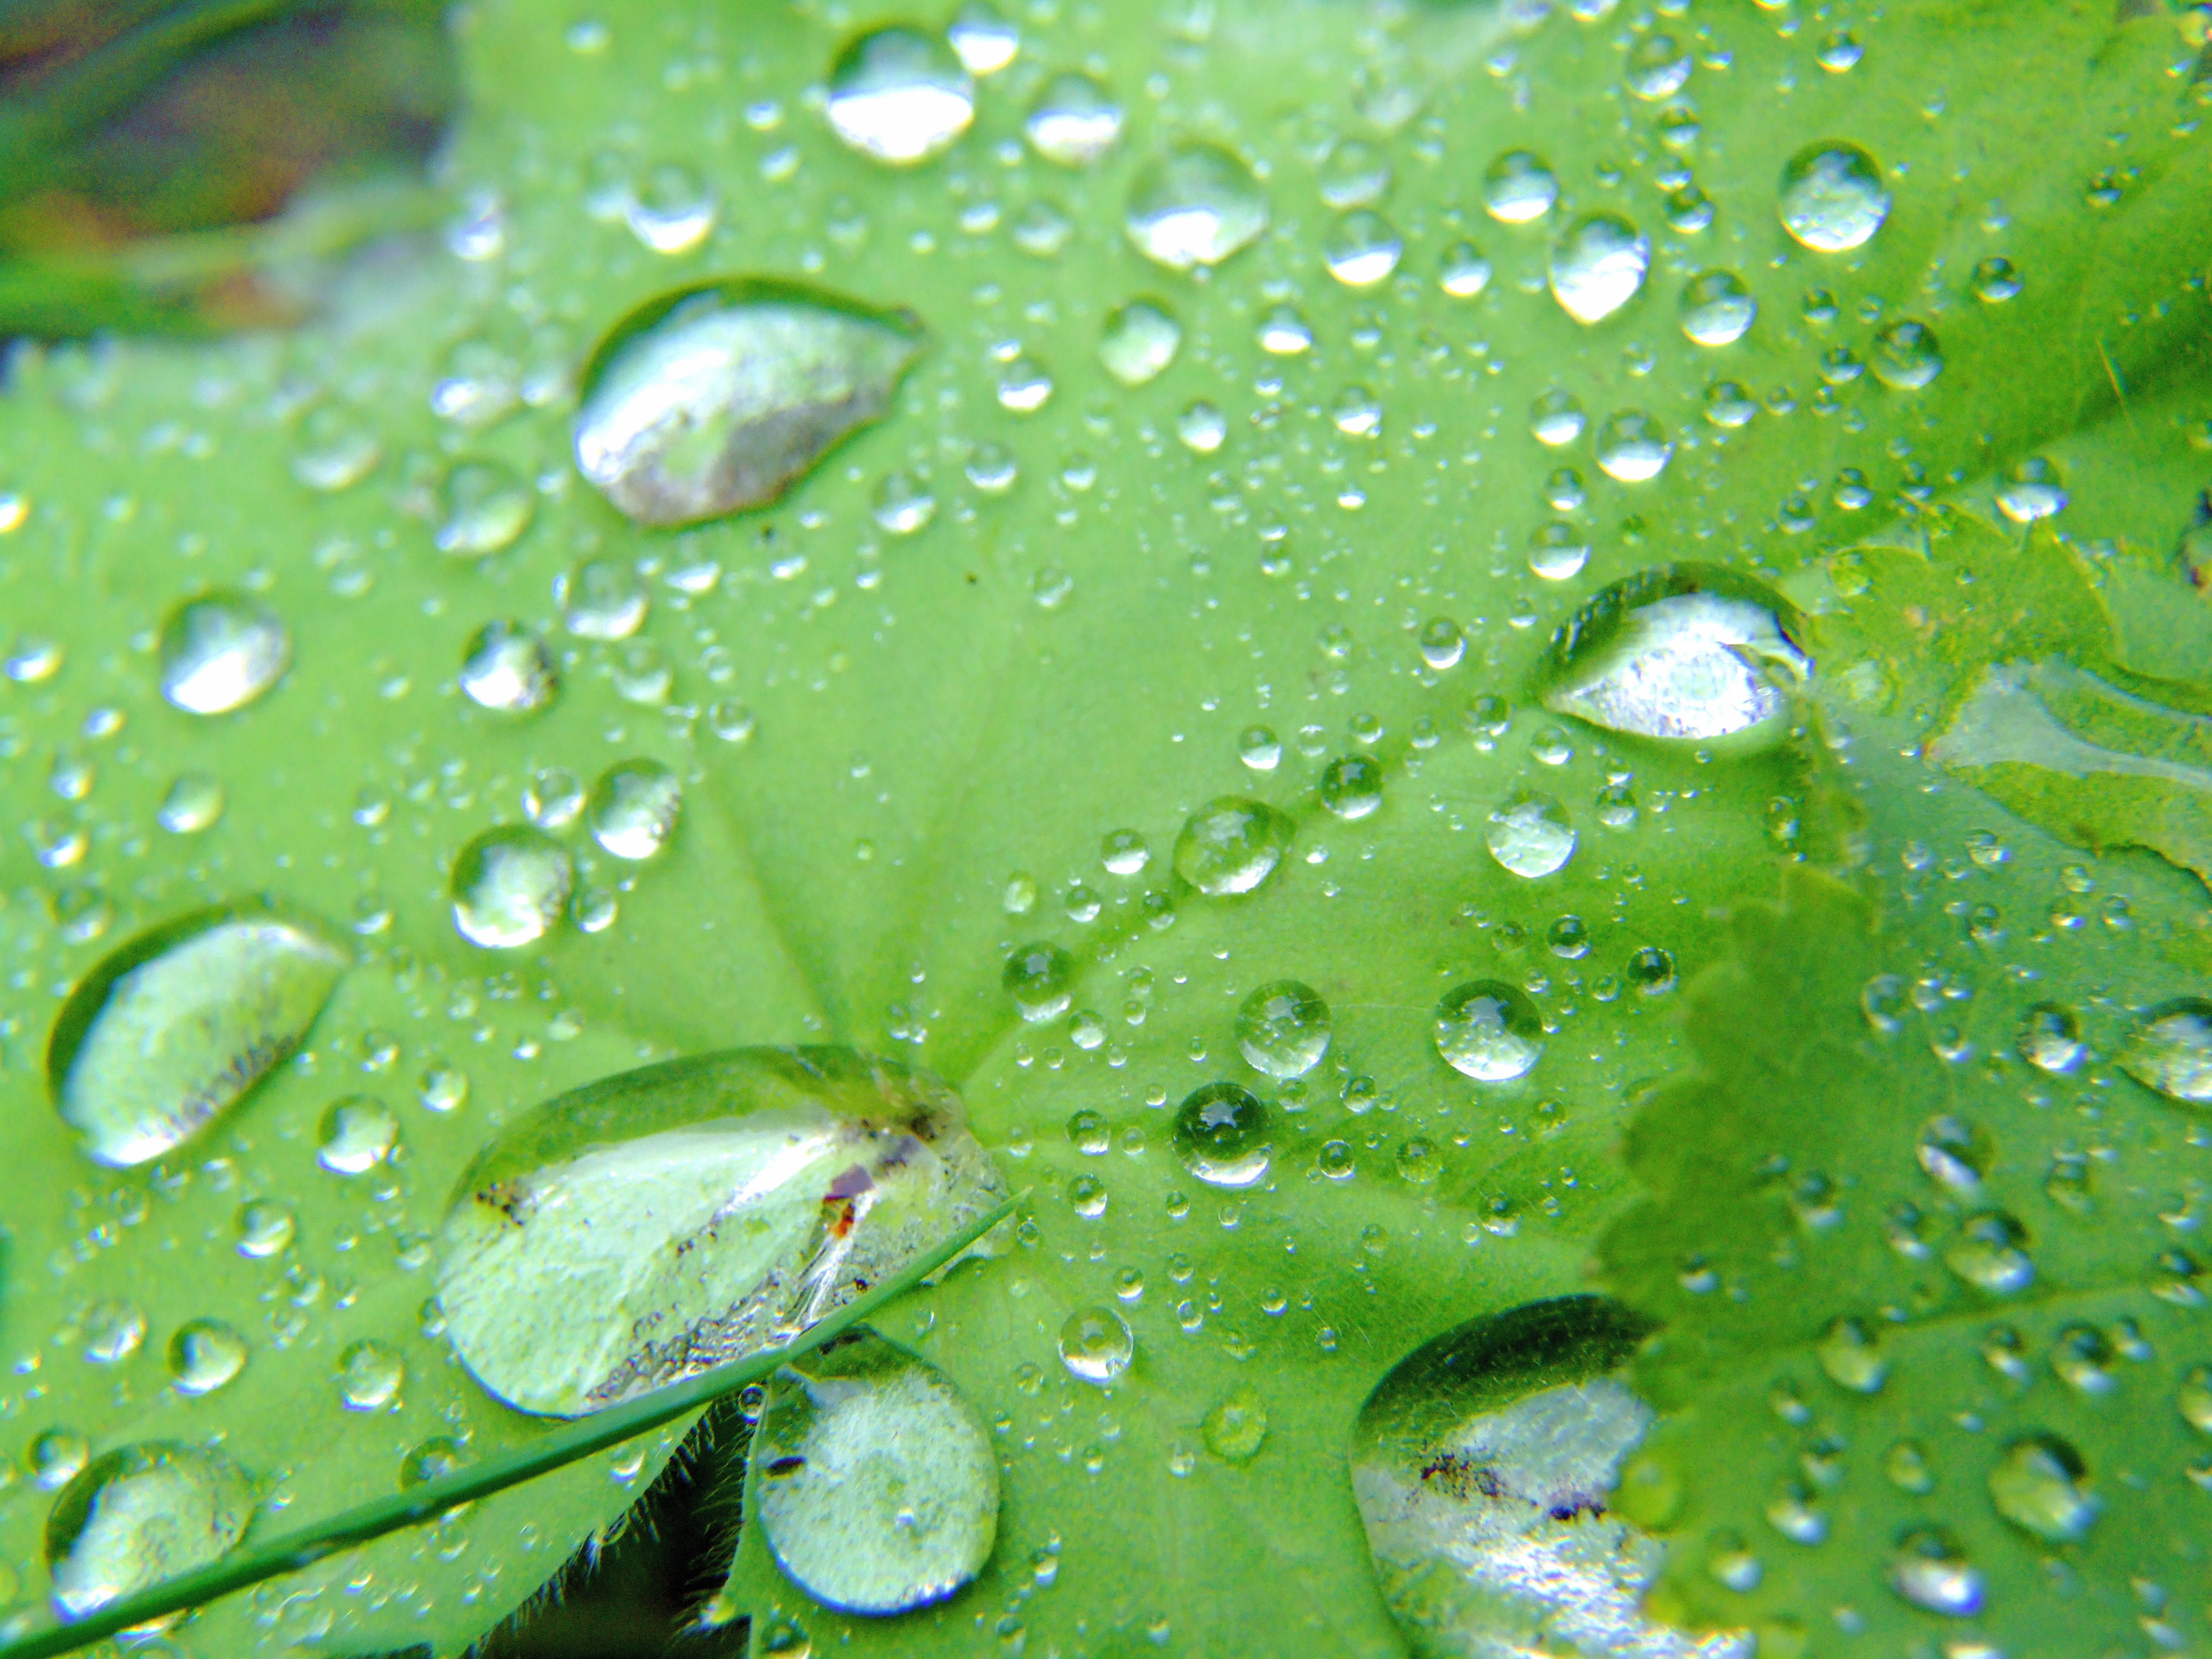 File:Water drops on green leaf.jpg - Wikimedia Commons